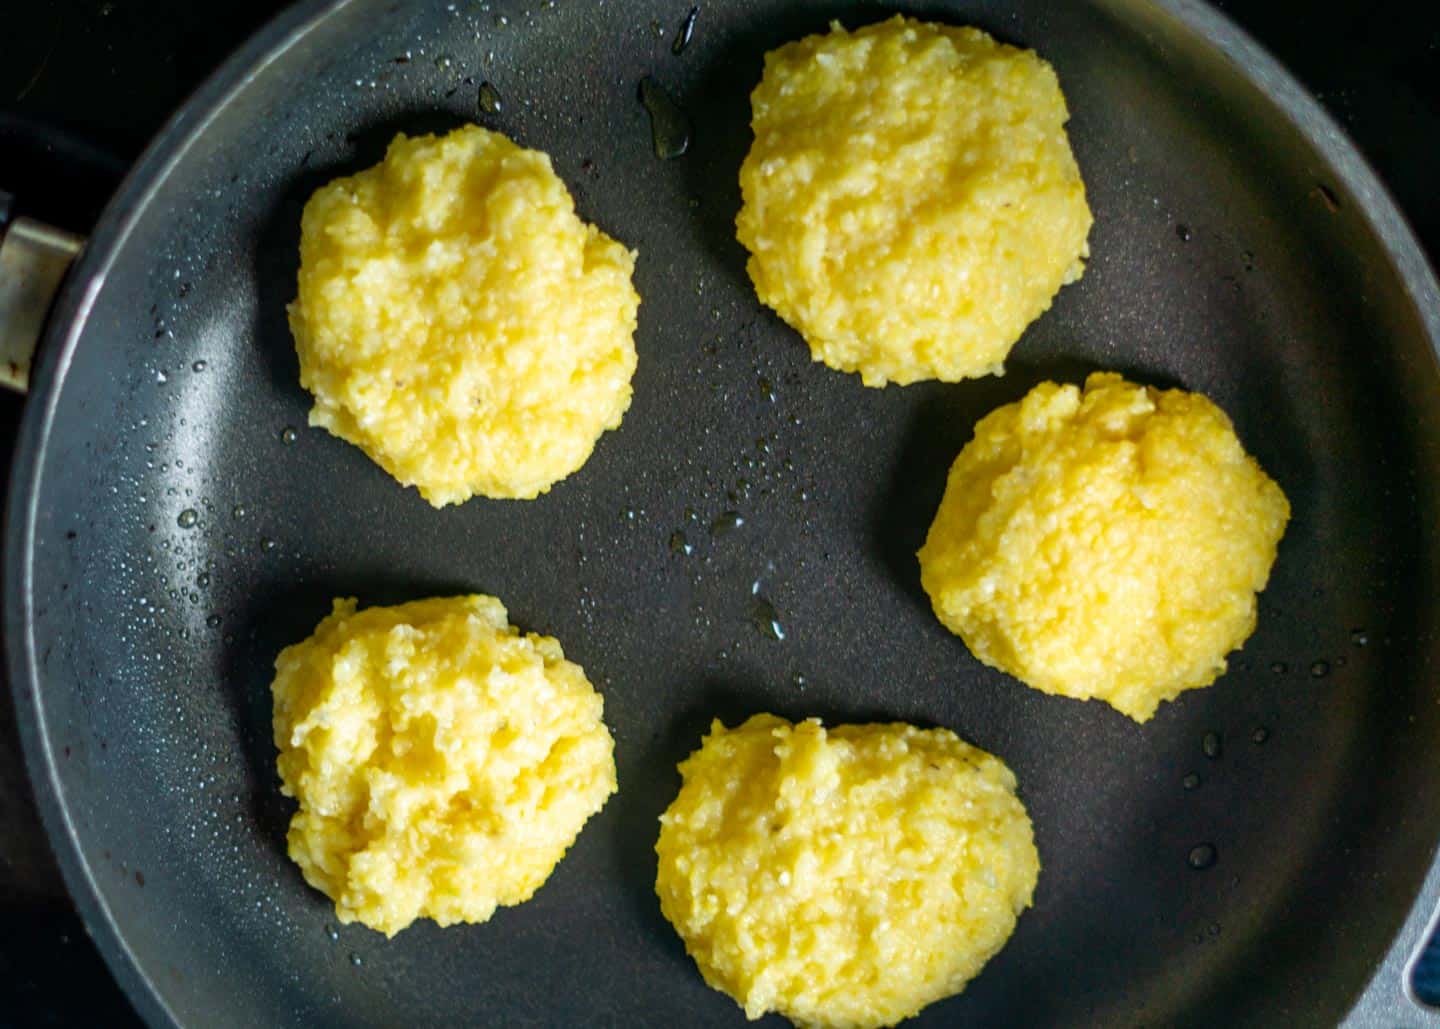 Formed patties in frying pan